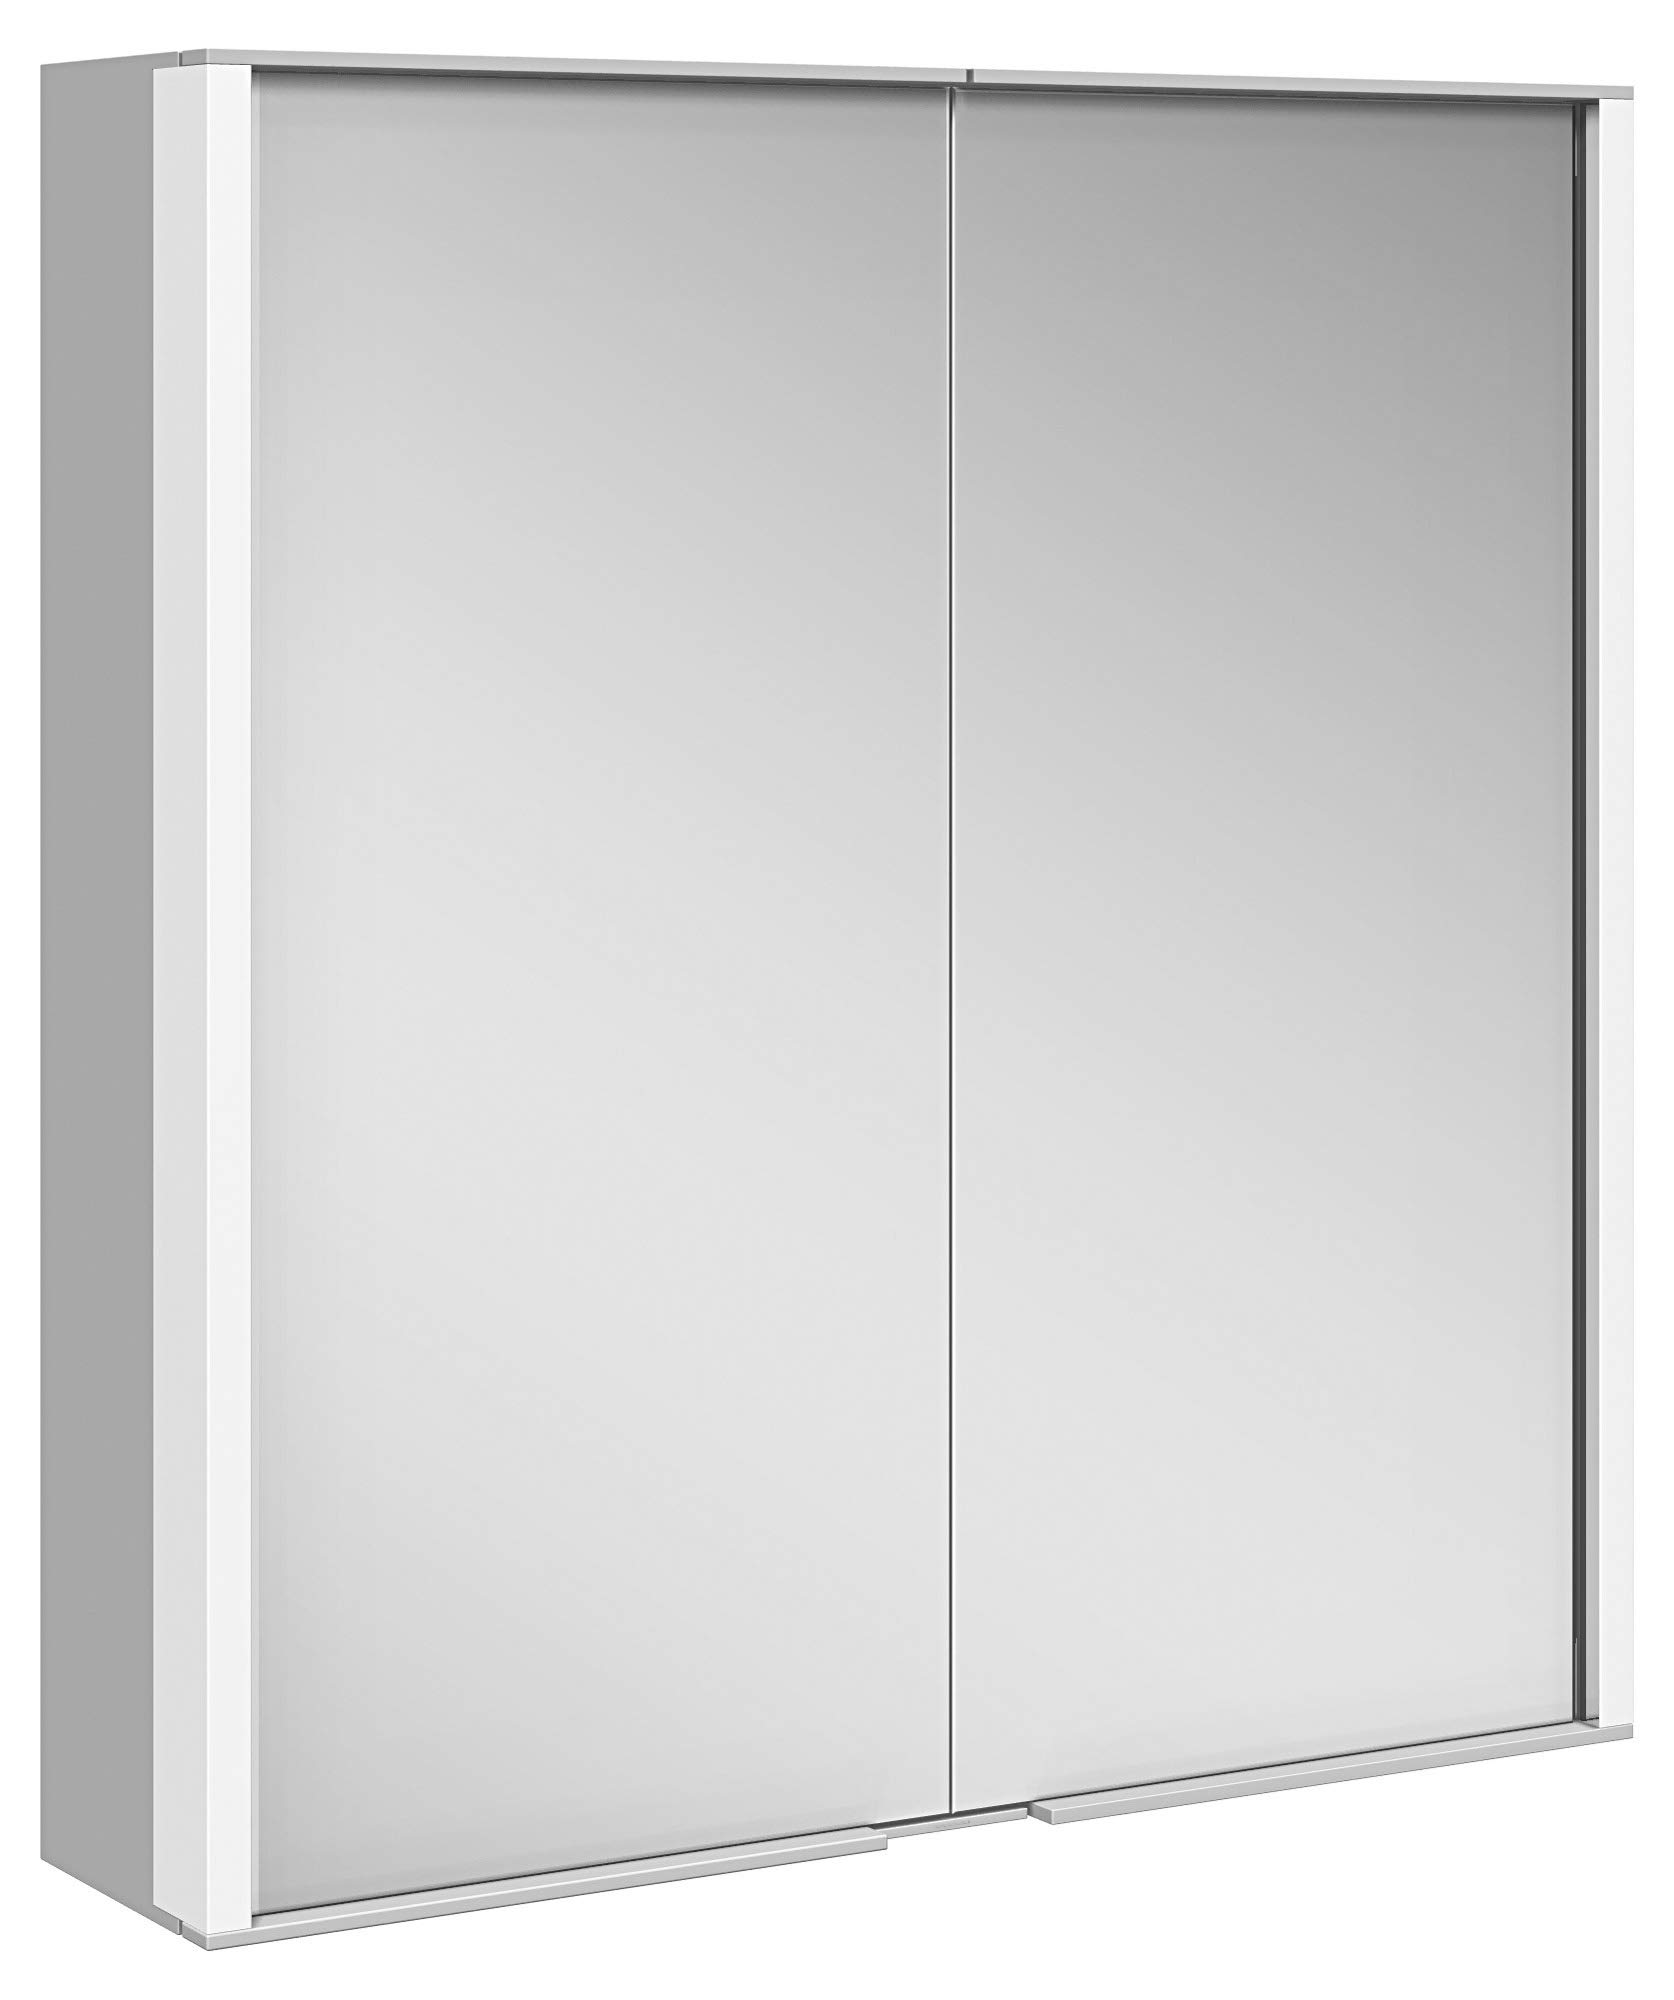 Keuco Spiegel-Schrank mit Variabler LED-Beleuchtung dimmbar, Badezimmer-Spiegelschrank, mit Aluminium-Korpus, mit 2 Türen, 80x70x16 cm Royal Match